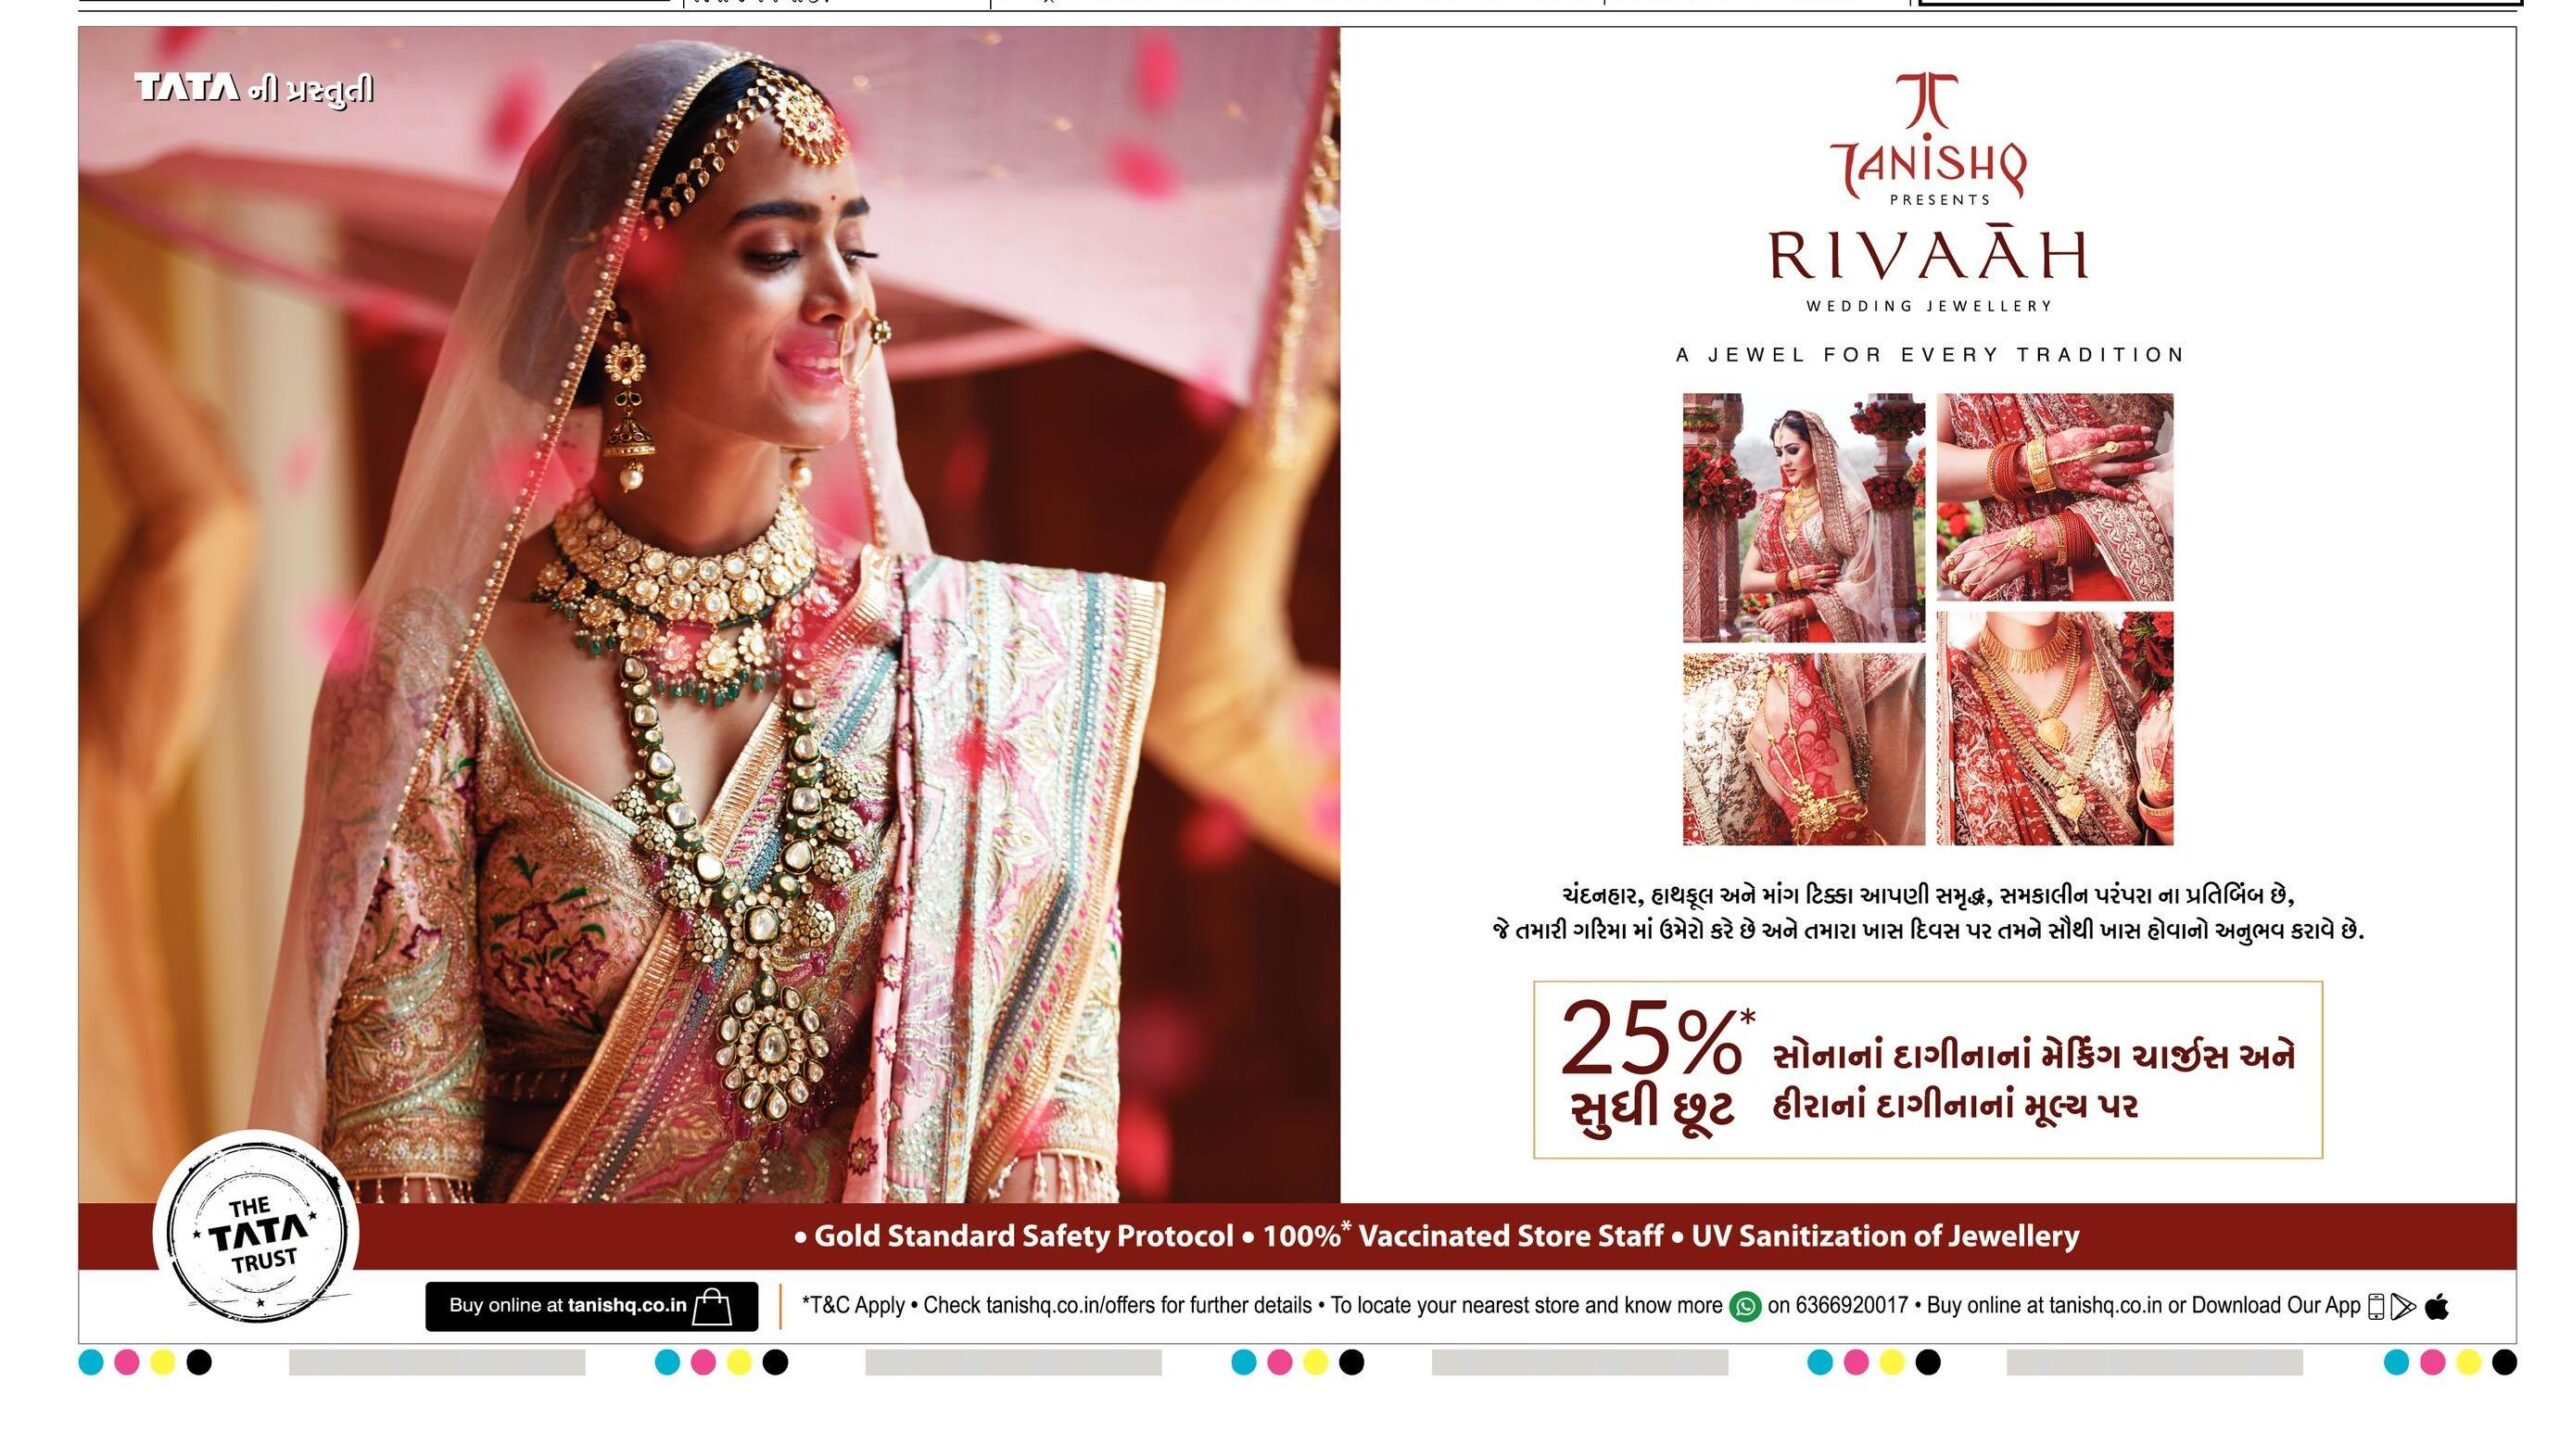 Tanishq Presents Rivaah Wedding Jewellery Ad Gujarat Samachar Ahmedabad published on 02-07-2021